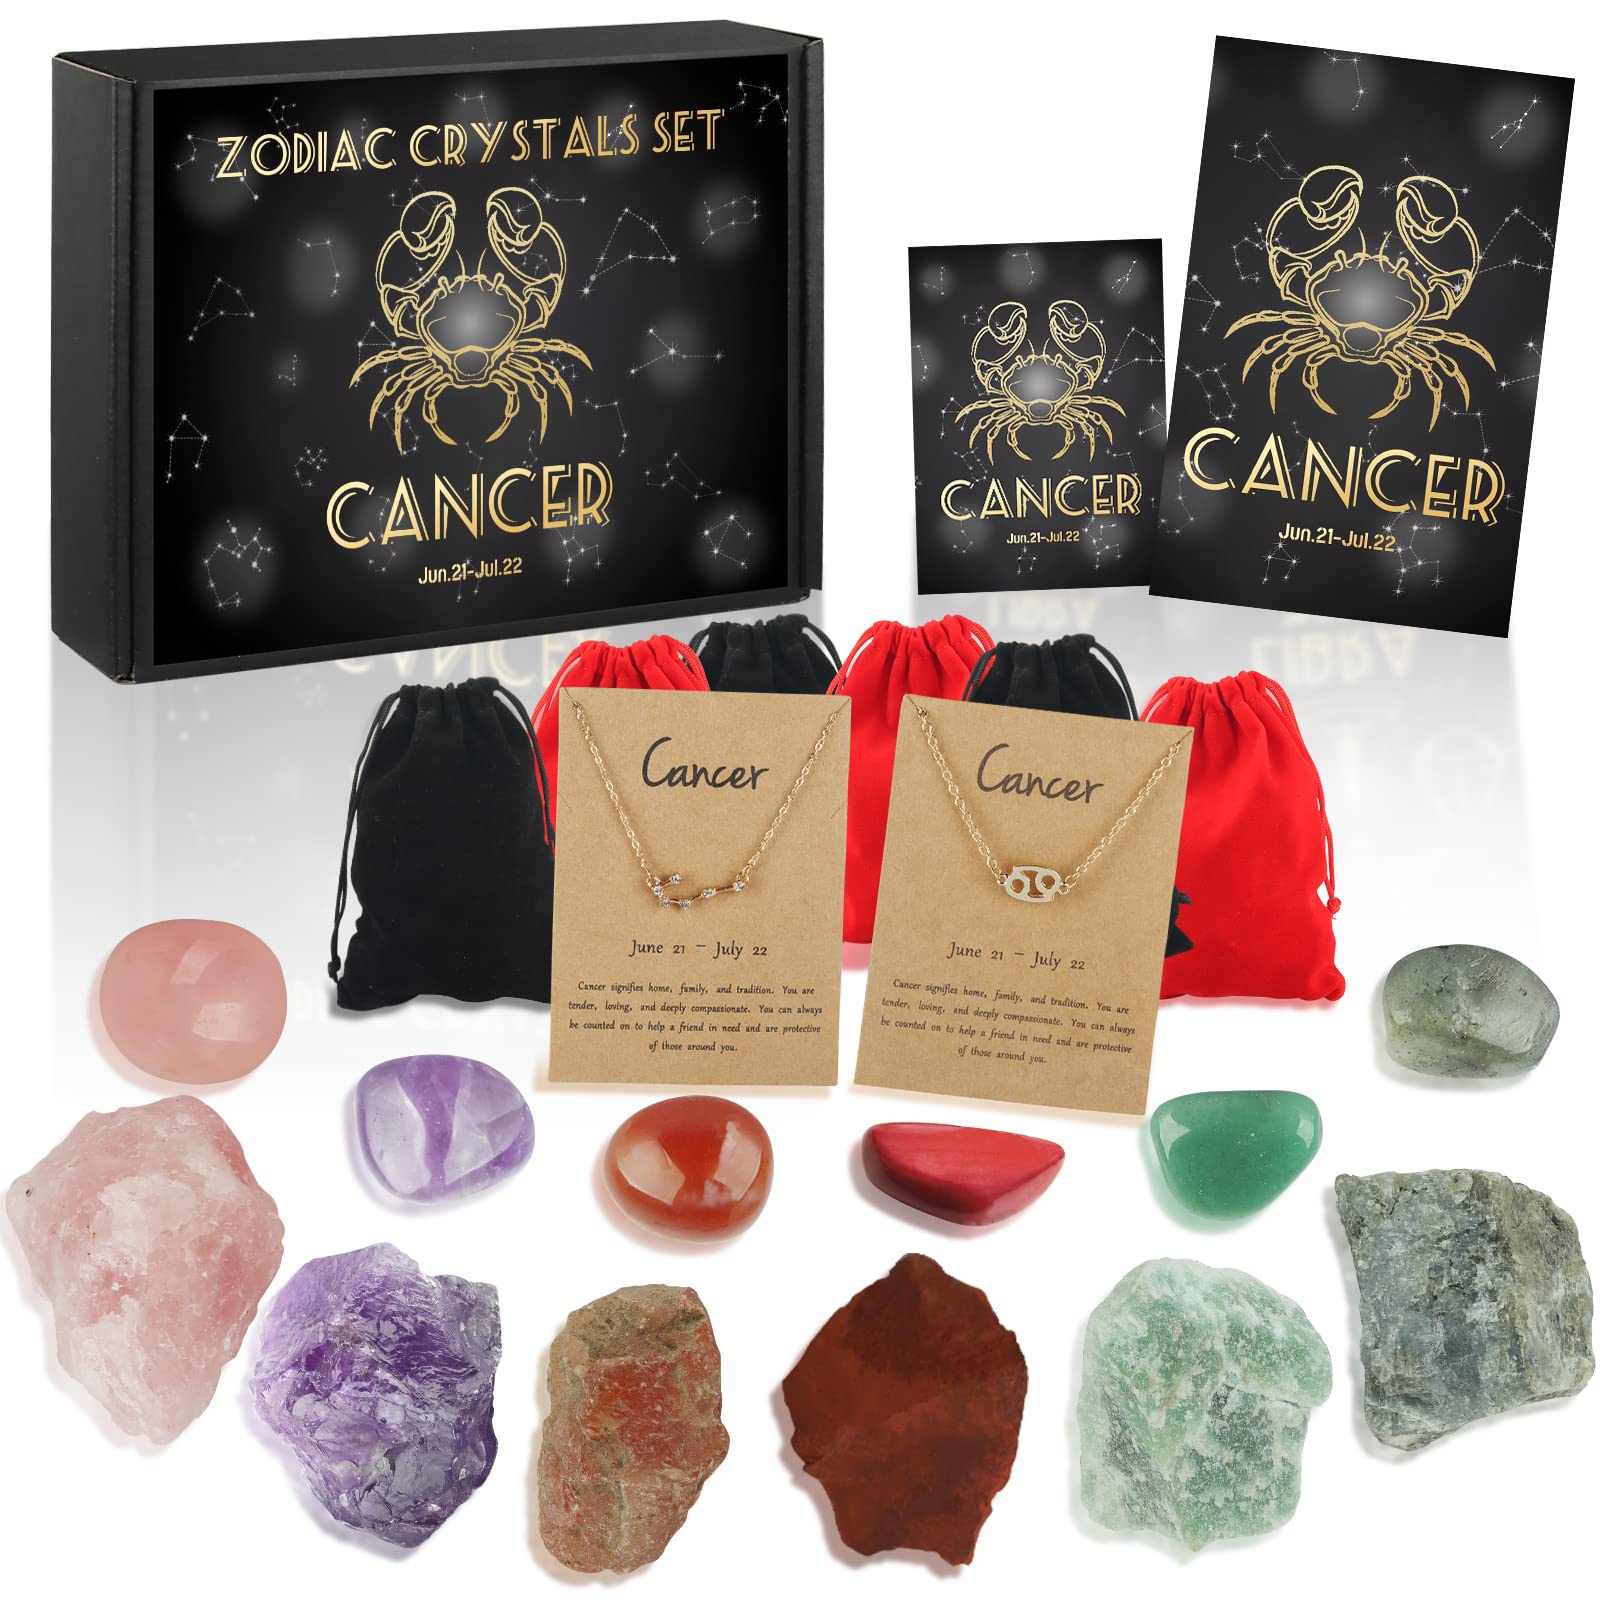 Zodiac Crystals Gift Set